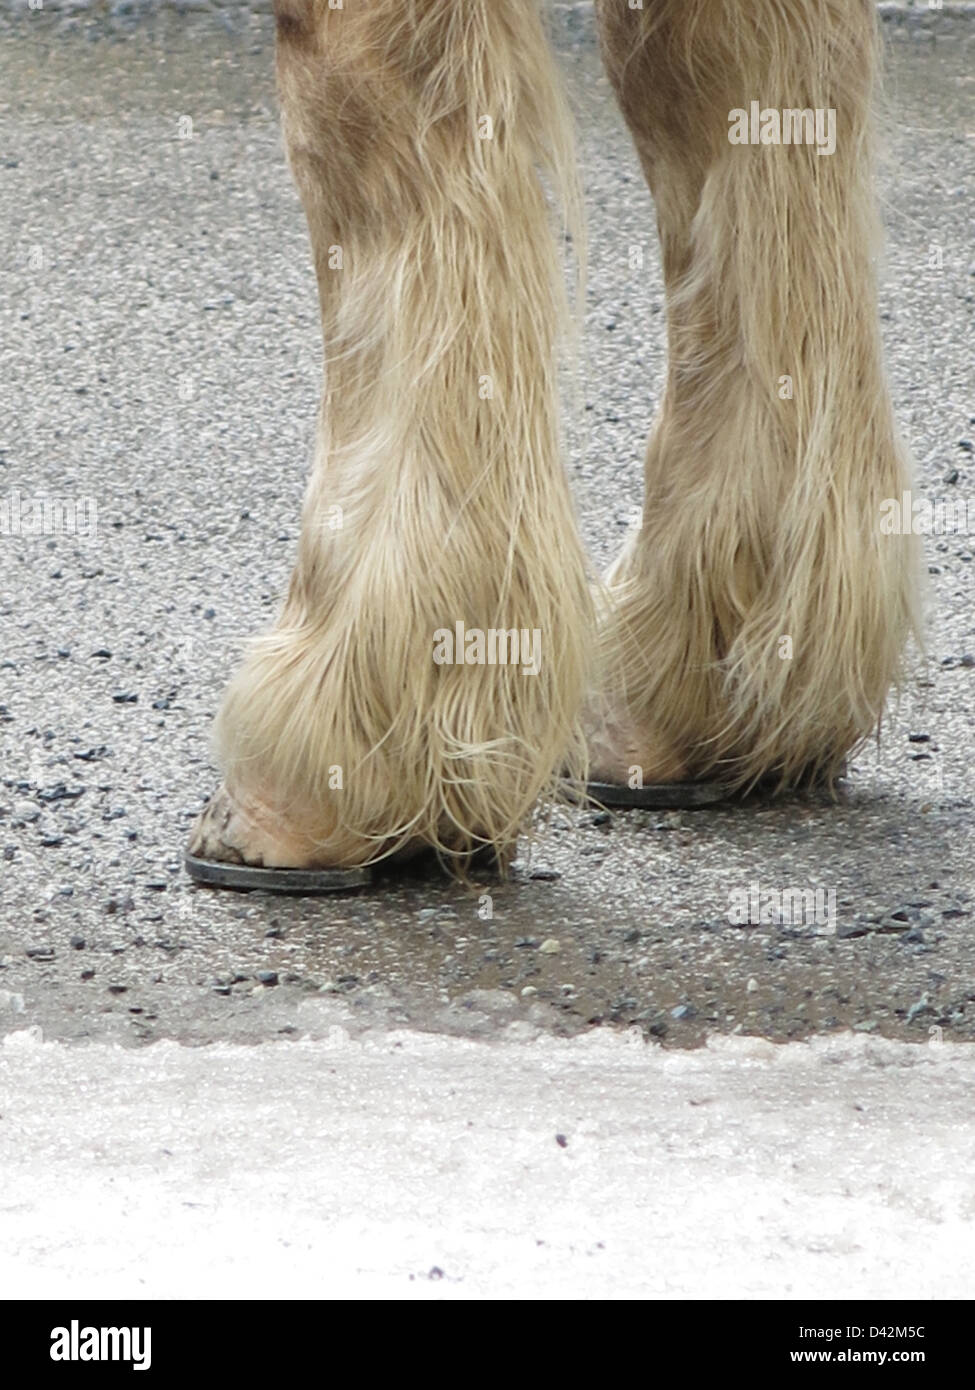 Working Horses Legs Dec 2012 Stock Photo